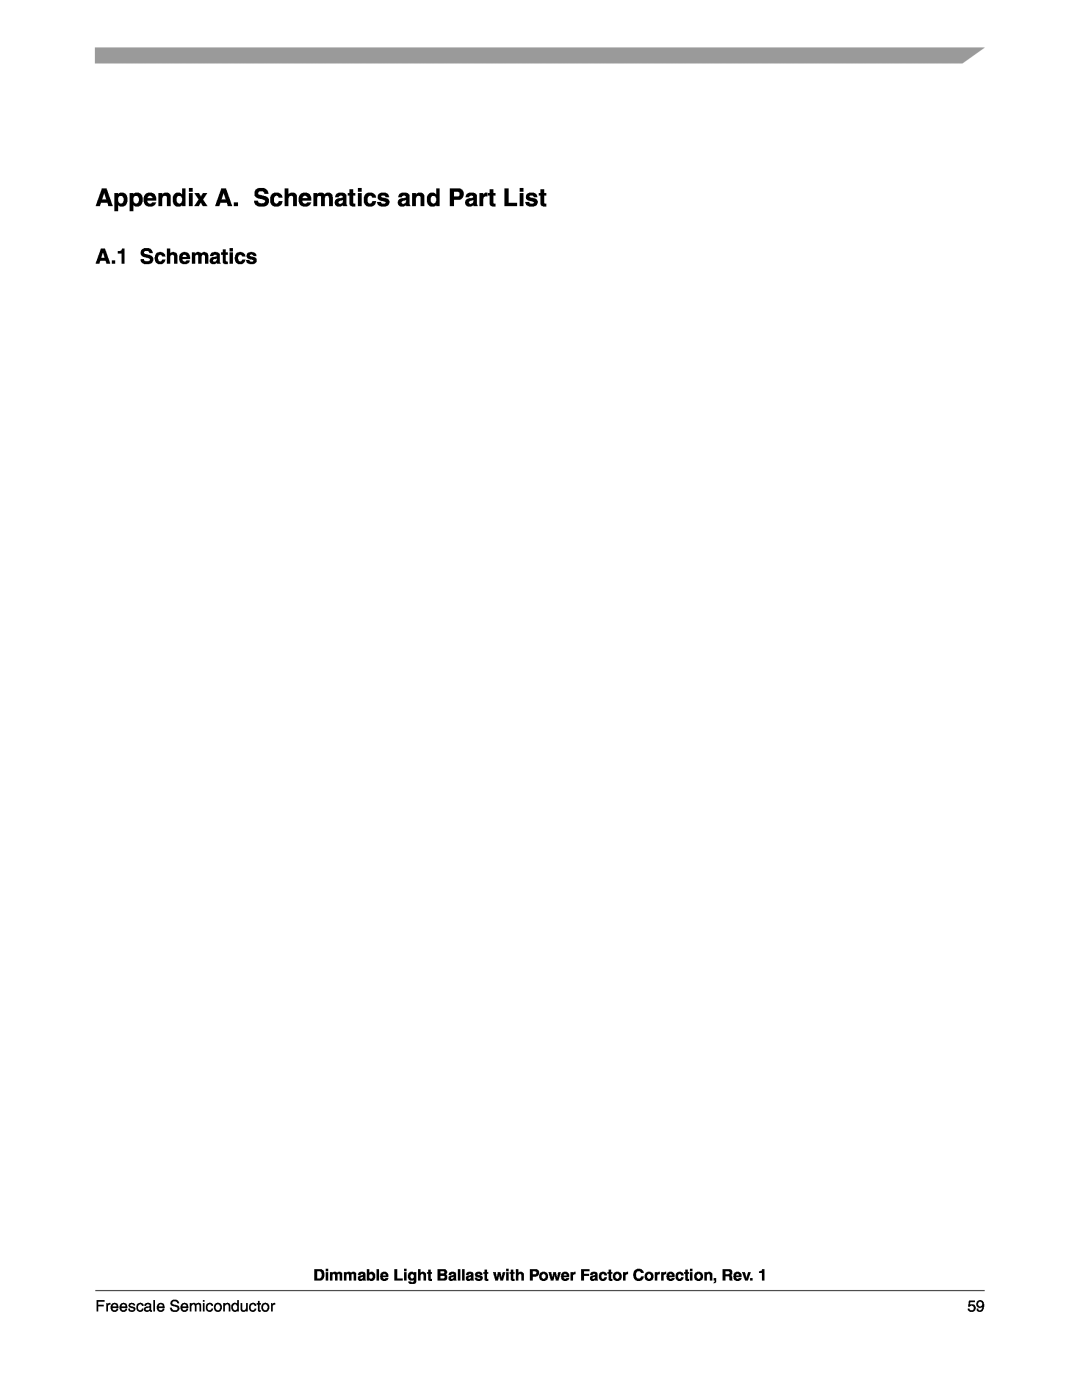 Freescale Semiconductor M68HC08 manual Appendix A. Schematics and Part List, A.1 Schematics 